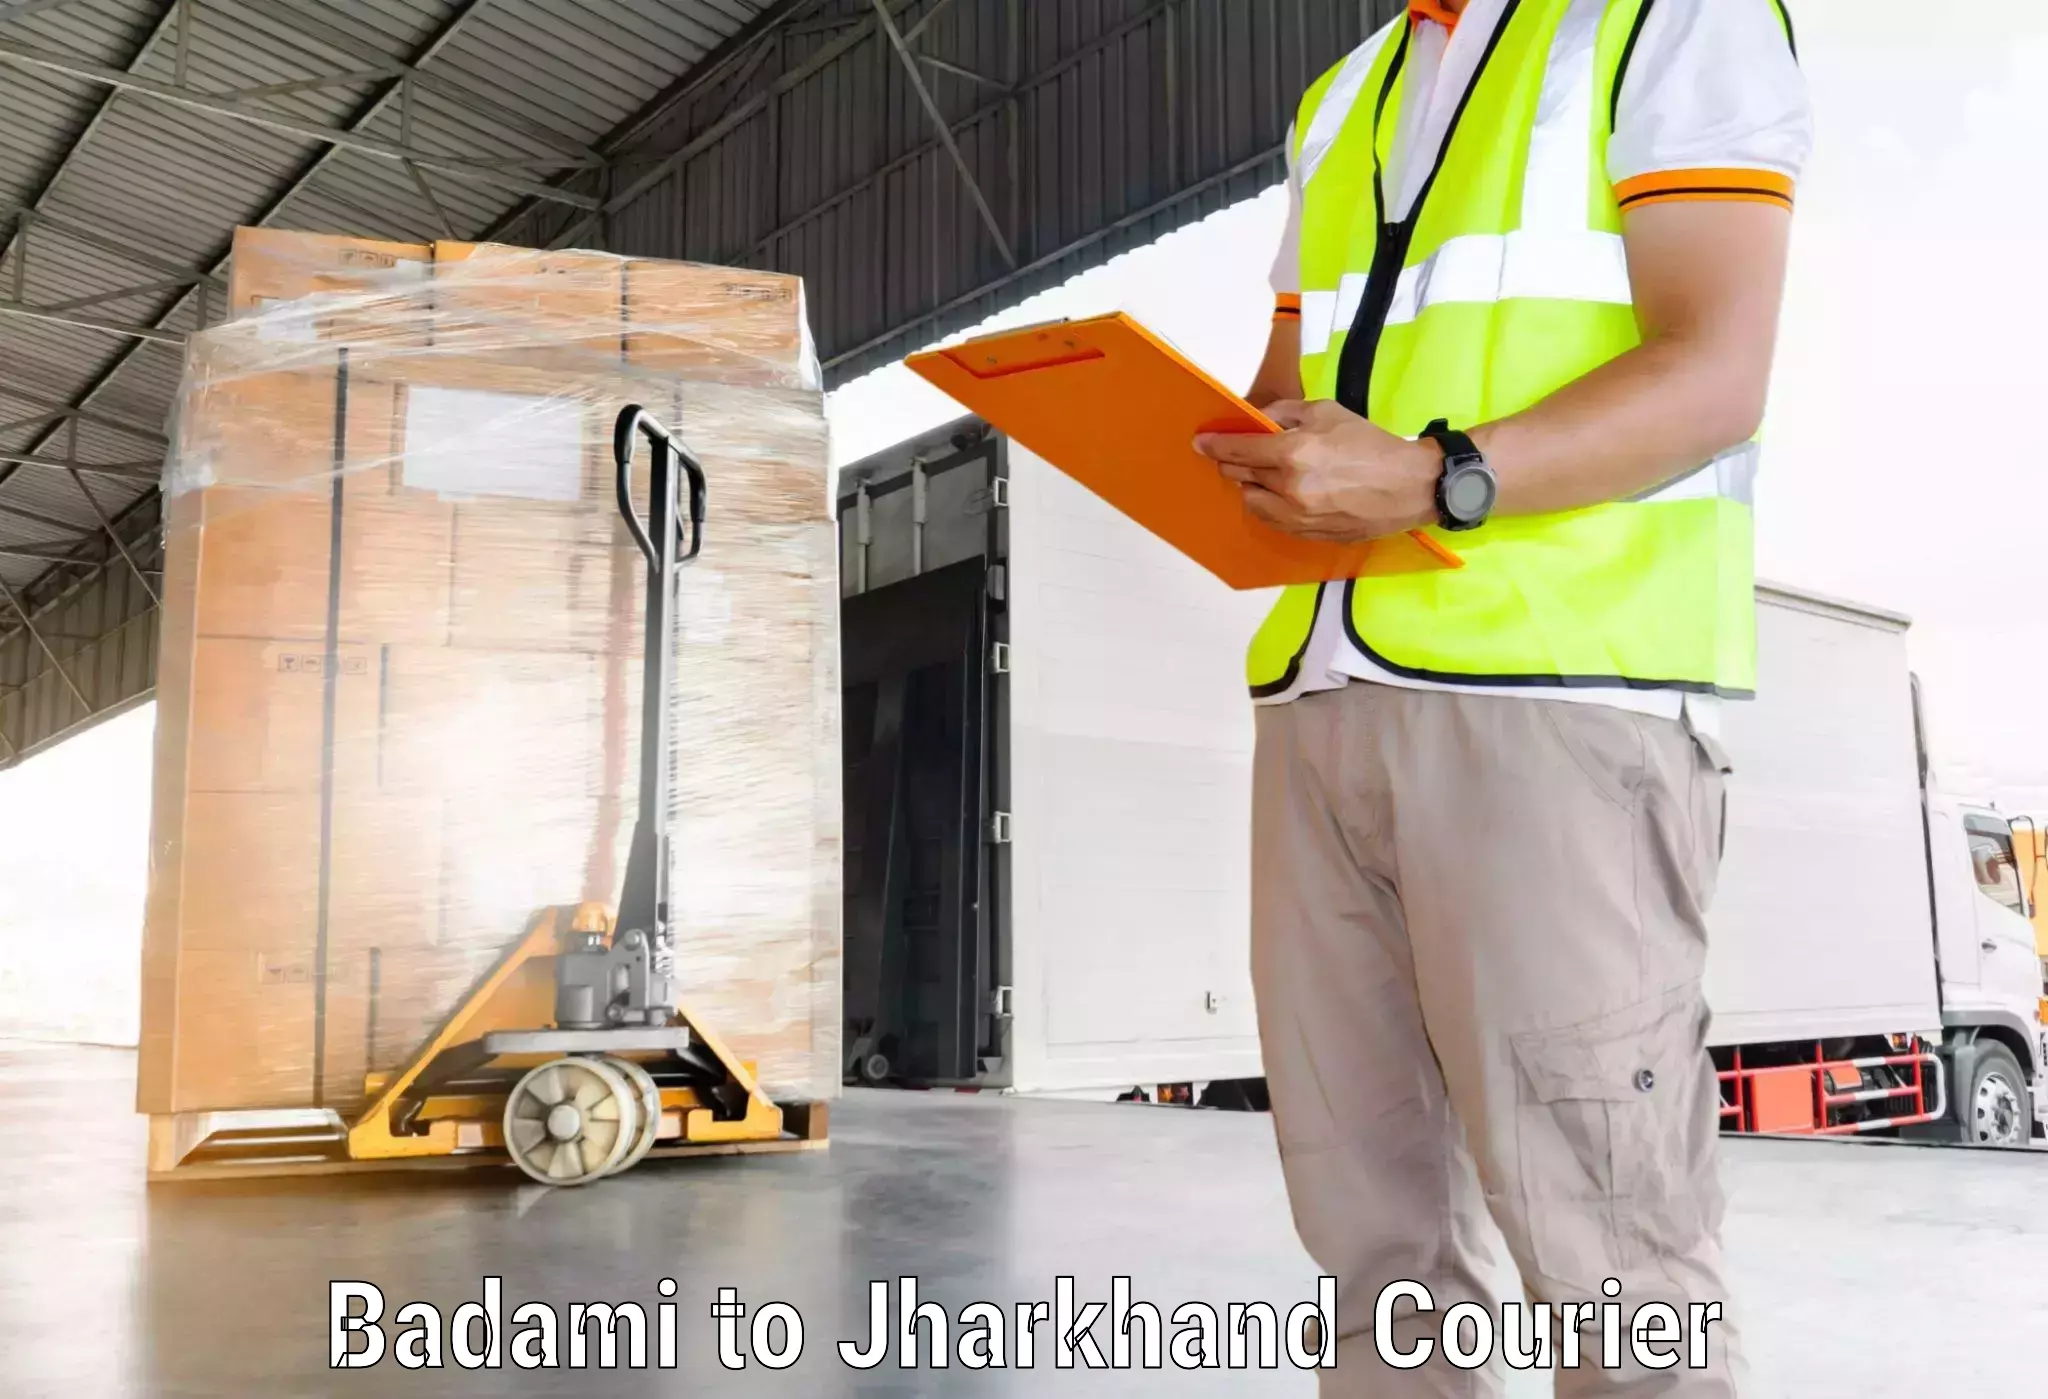 Package delivery network Badami to Medininagar